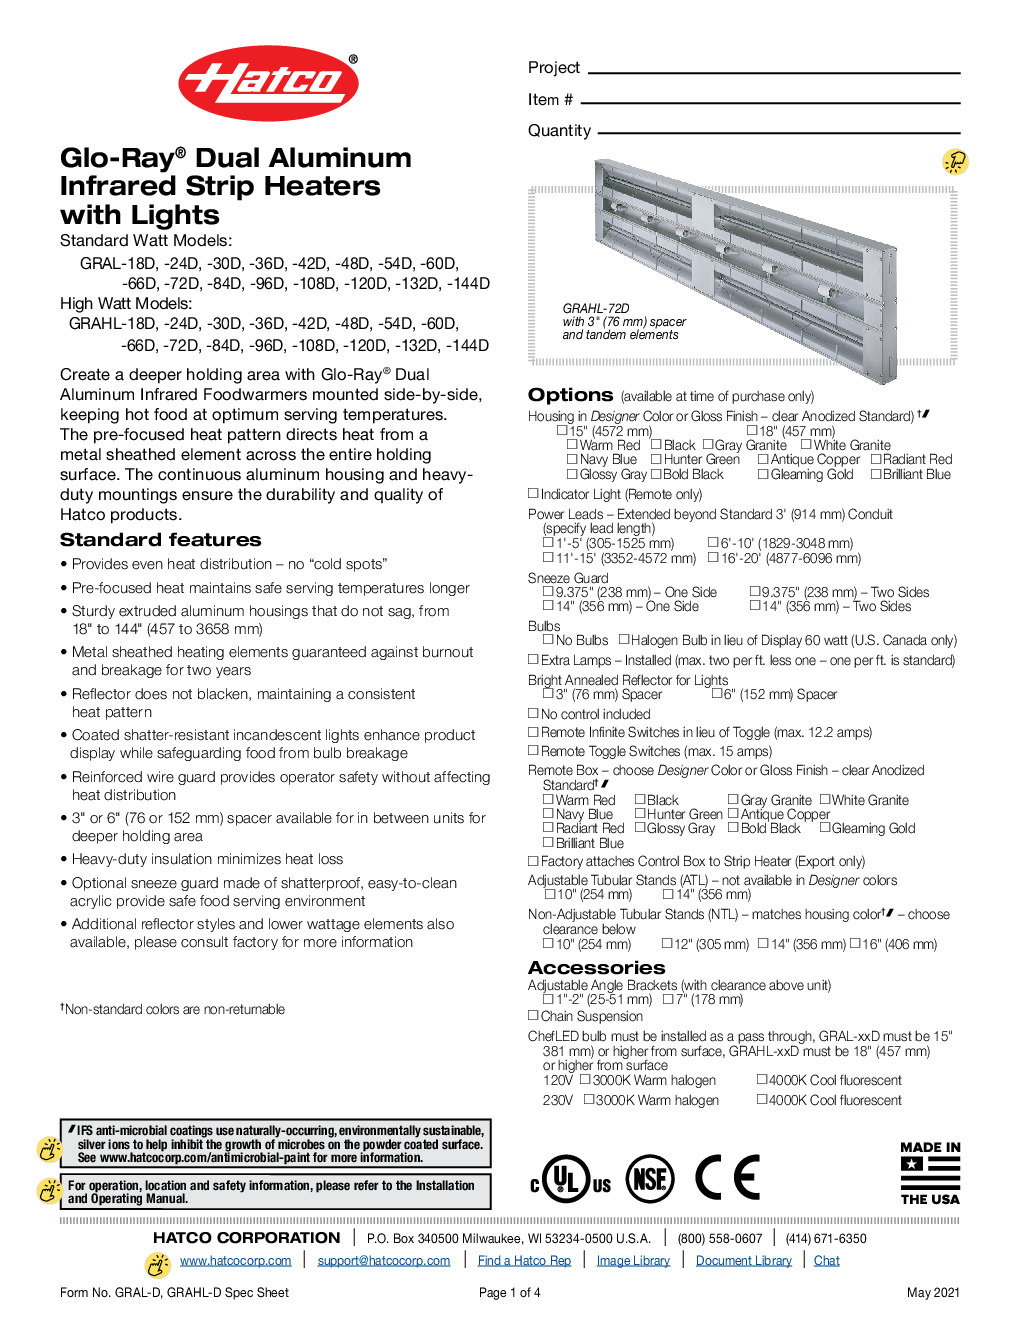 Hatco GRAHL-24D3-120QS Strip Type Heat Lamp